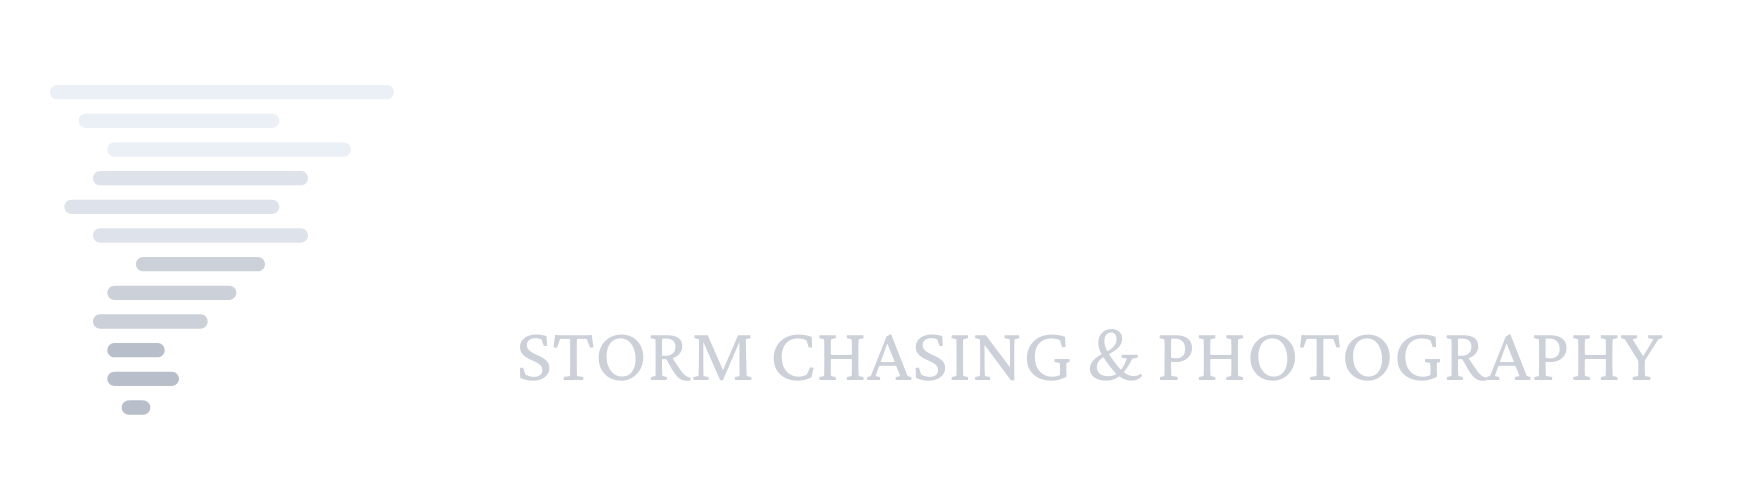 John Homenuk Storm Chasing & Photography